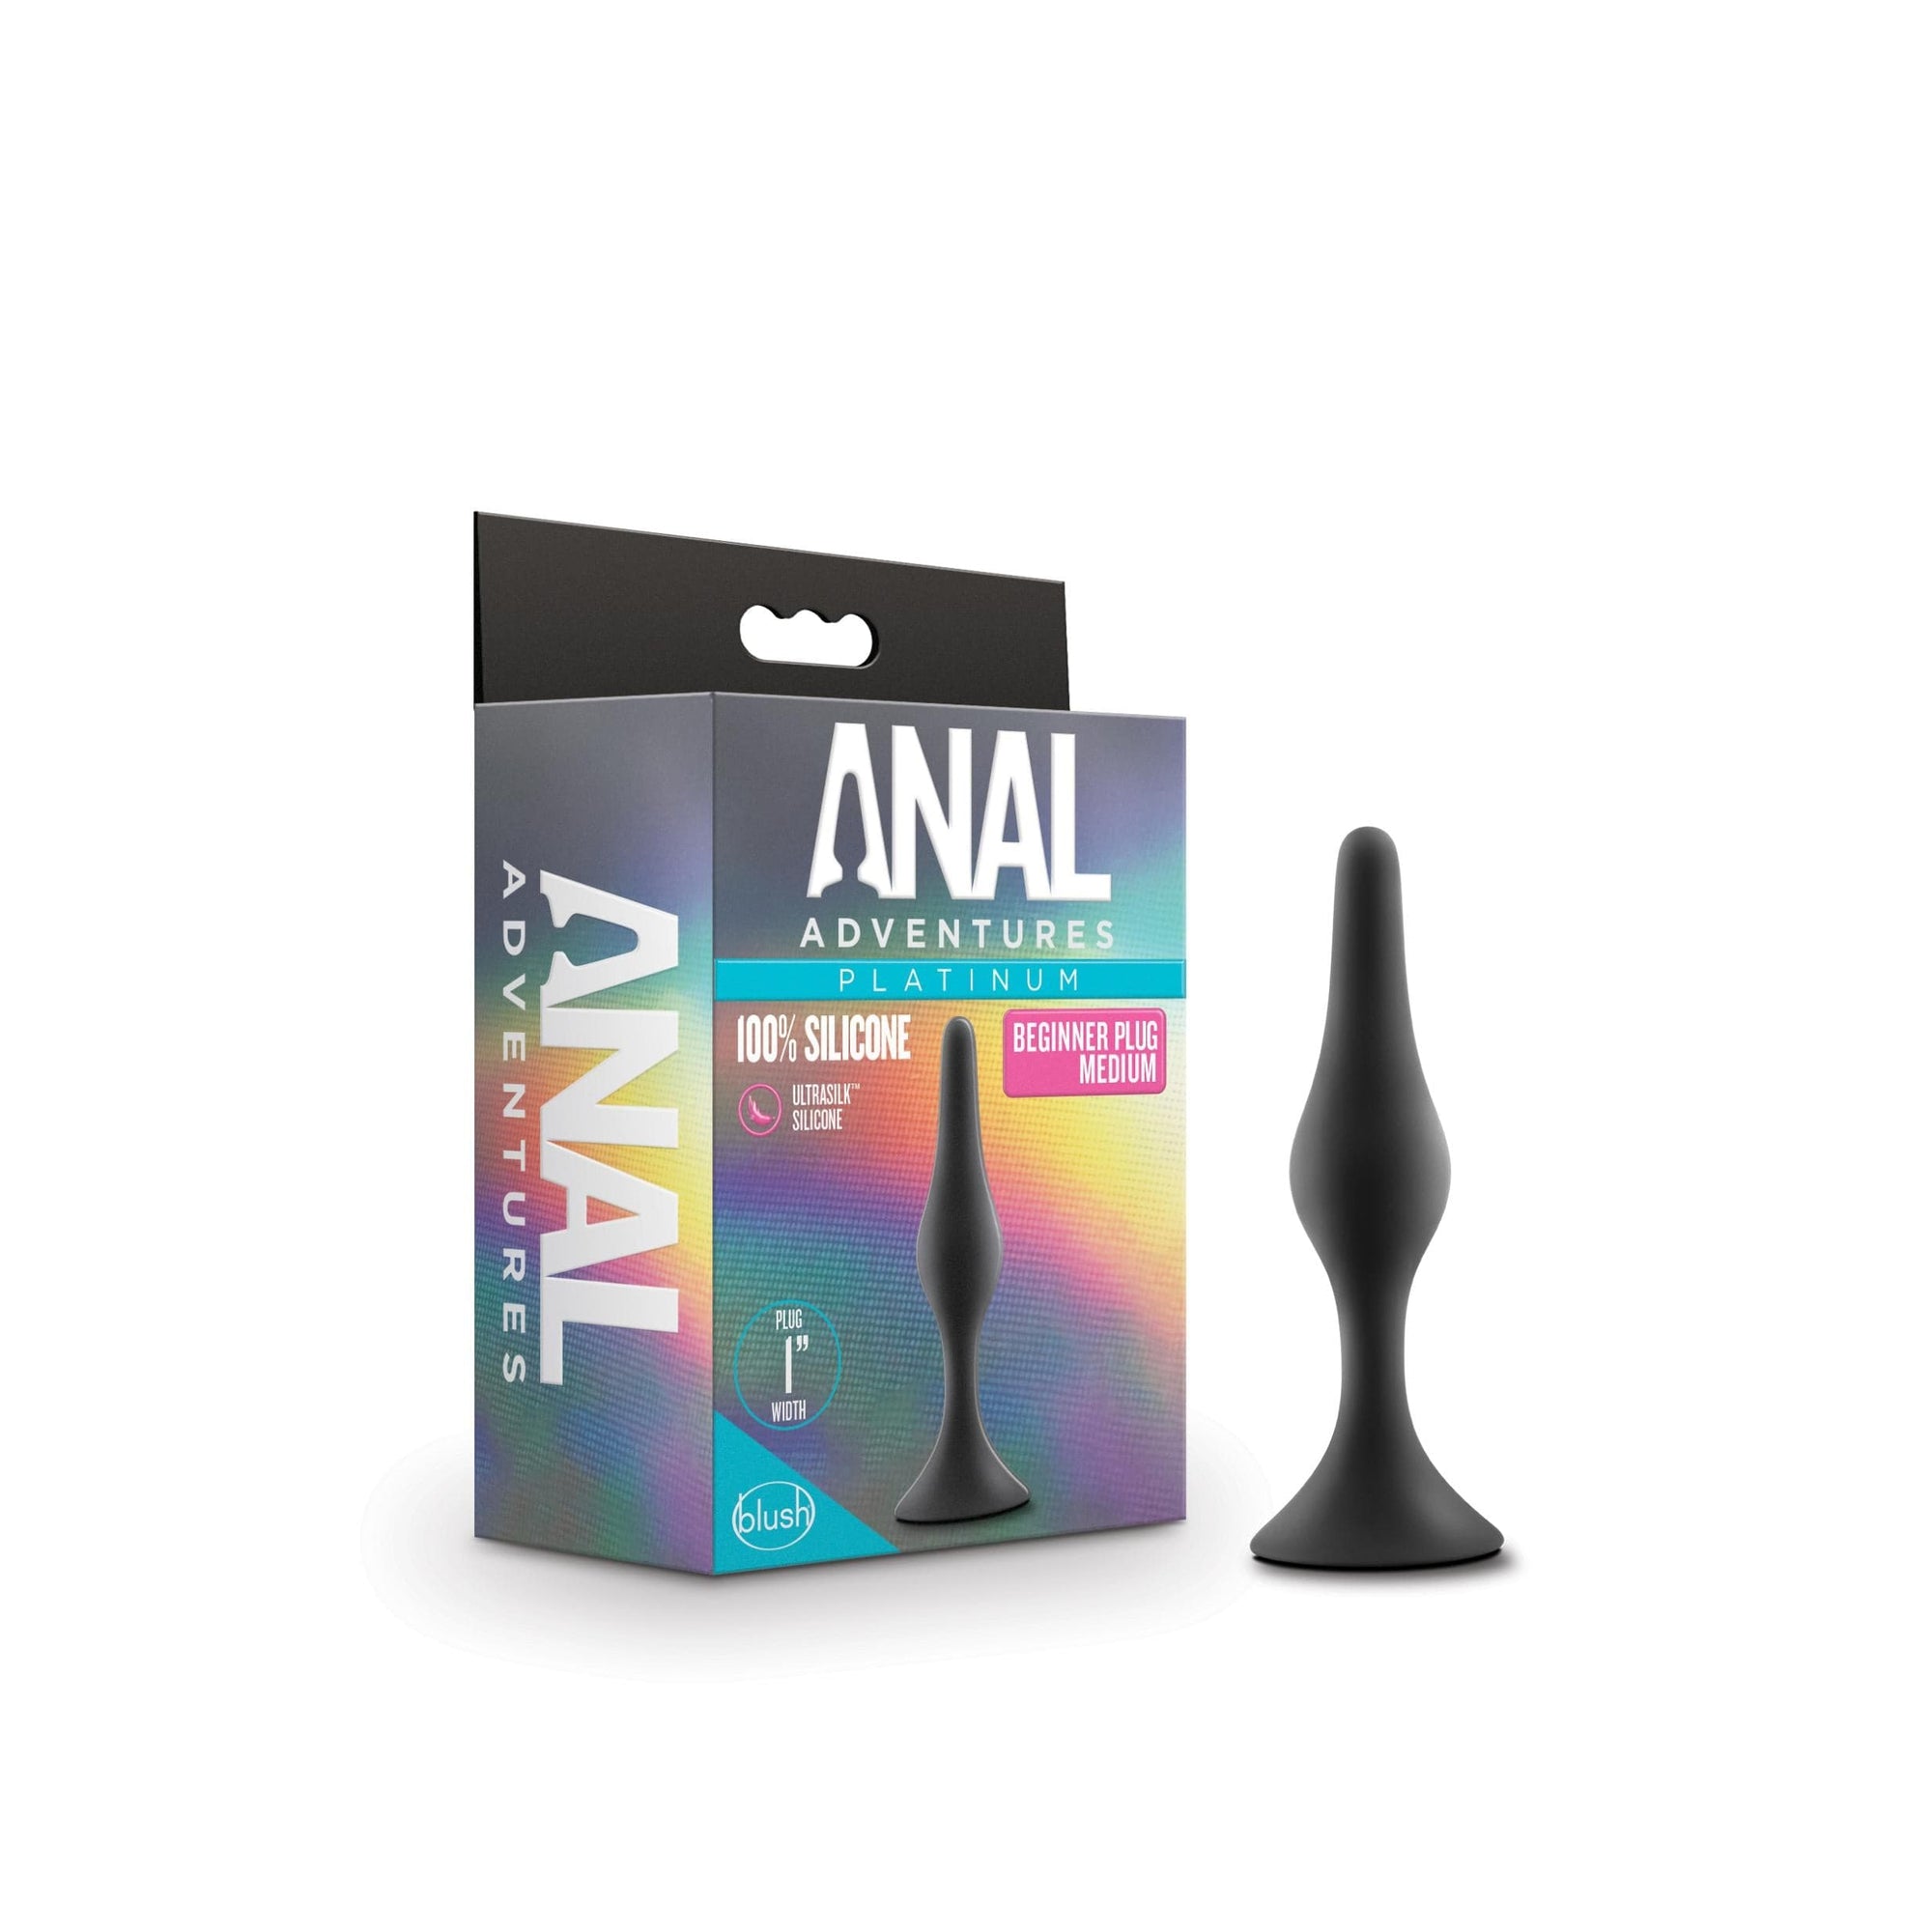 anal butt plug, best anal plugs